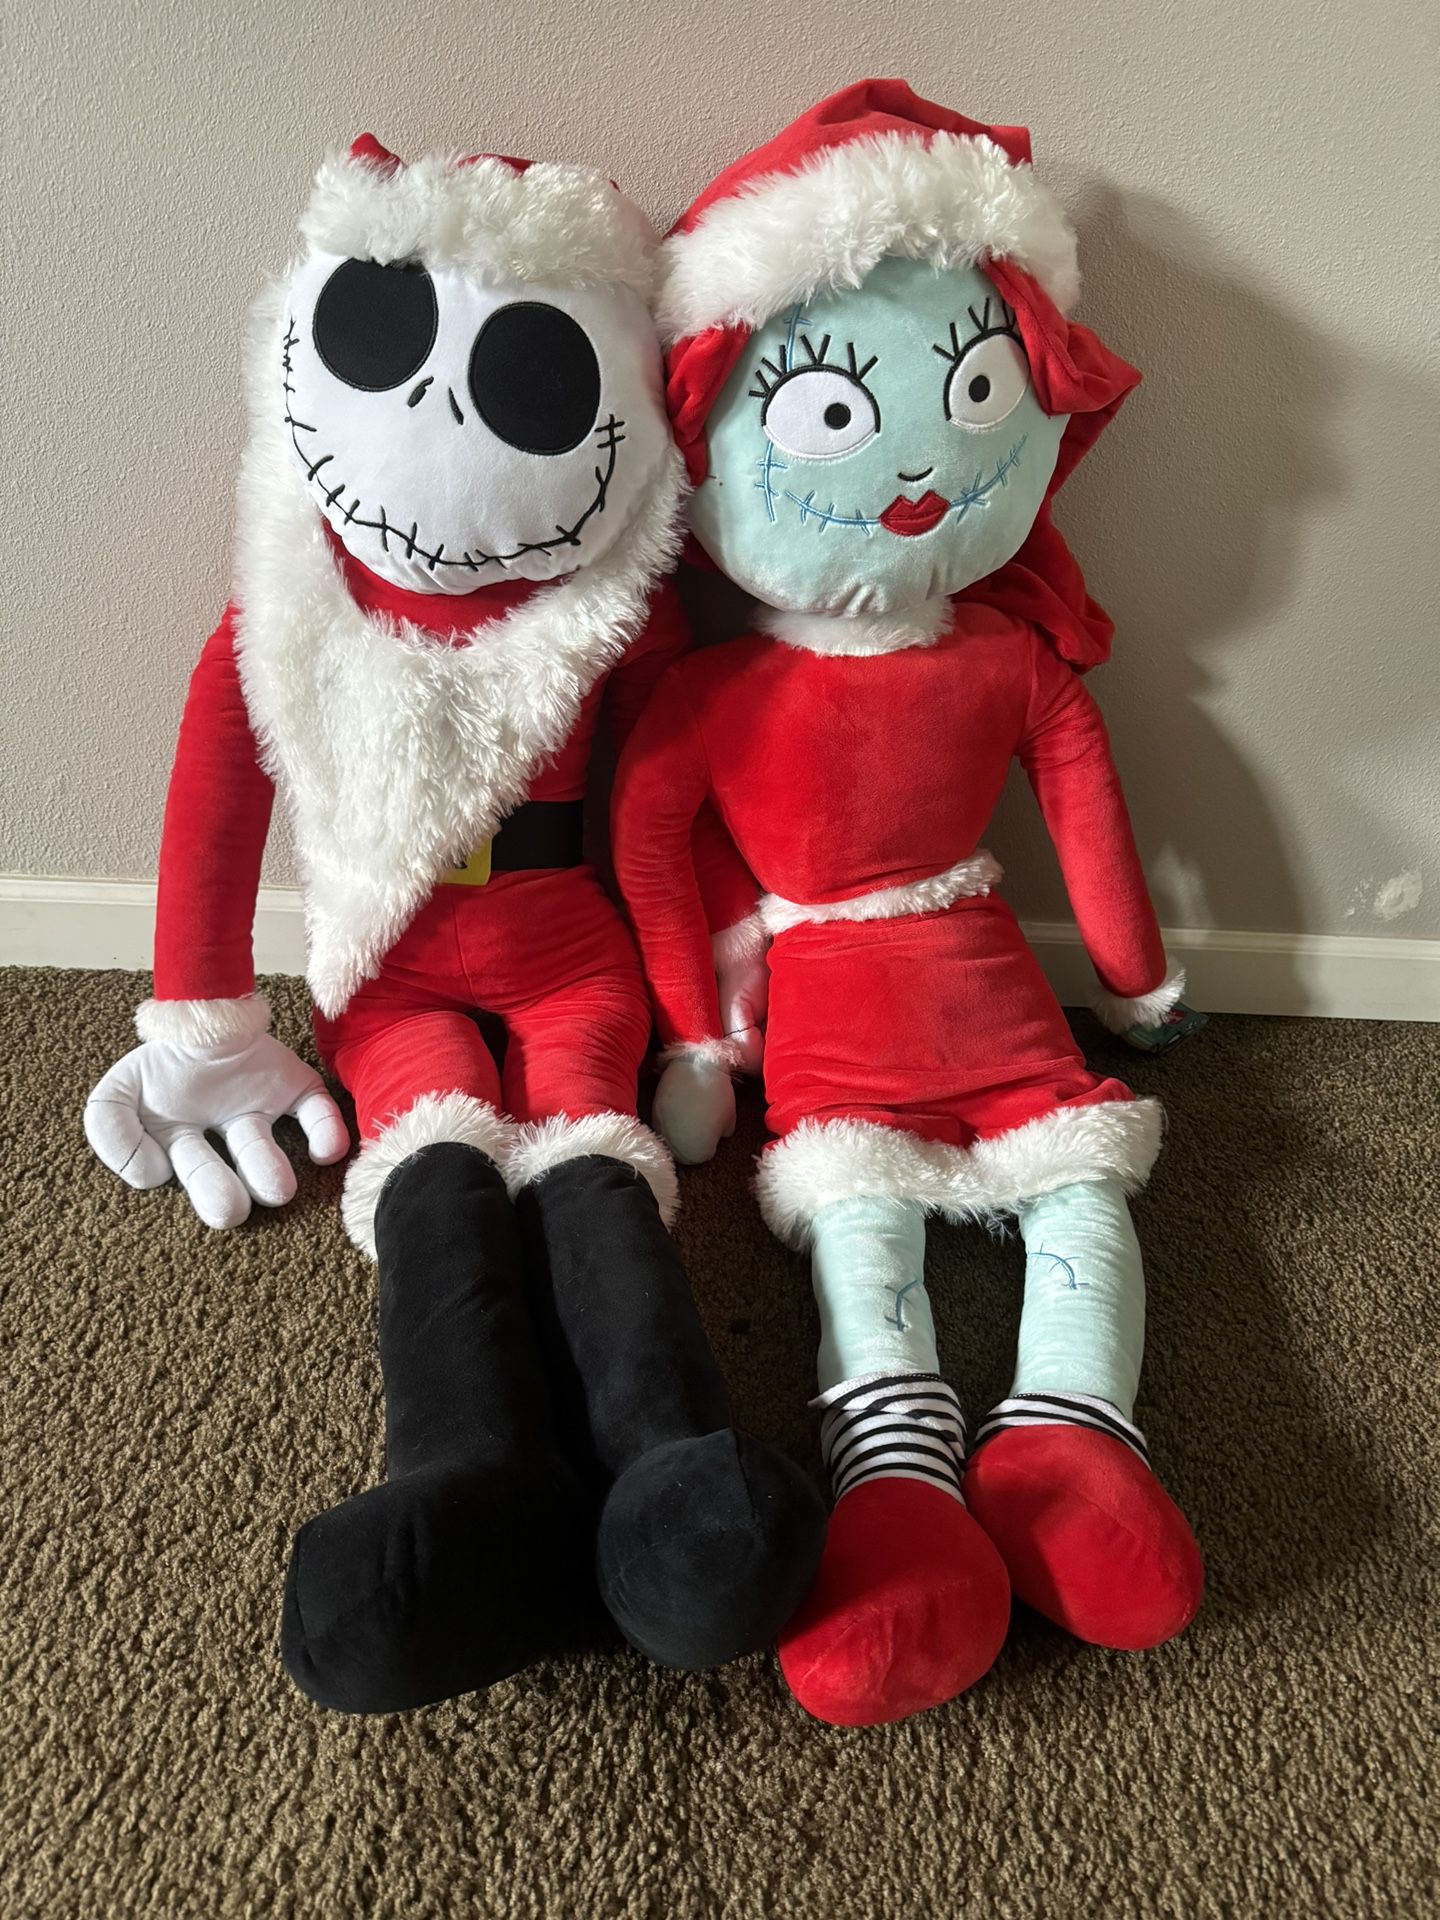 Jack and Sally Nightmare Before Christmas 